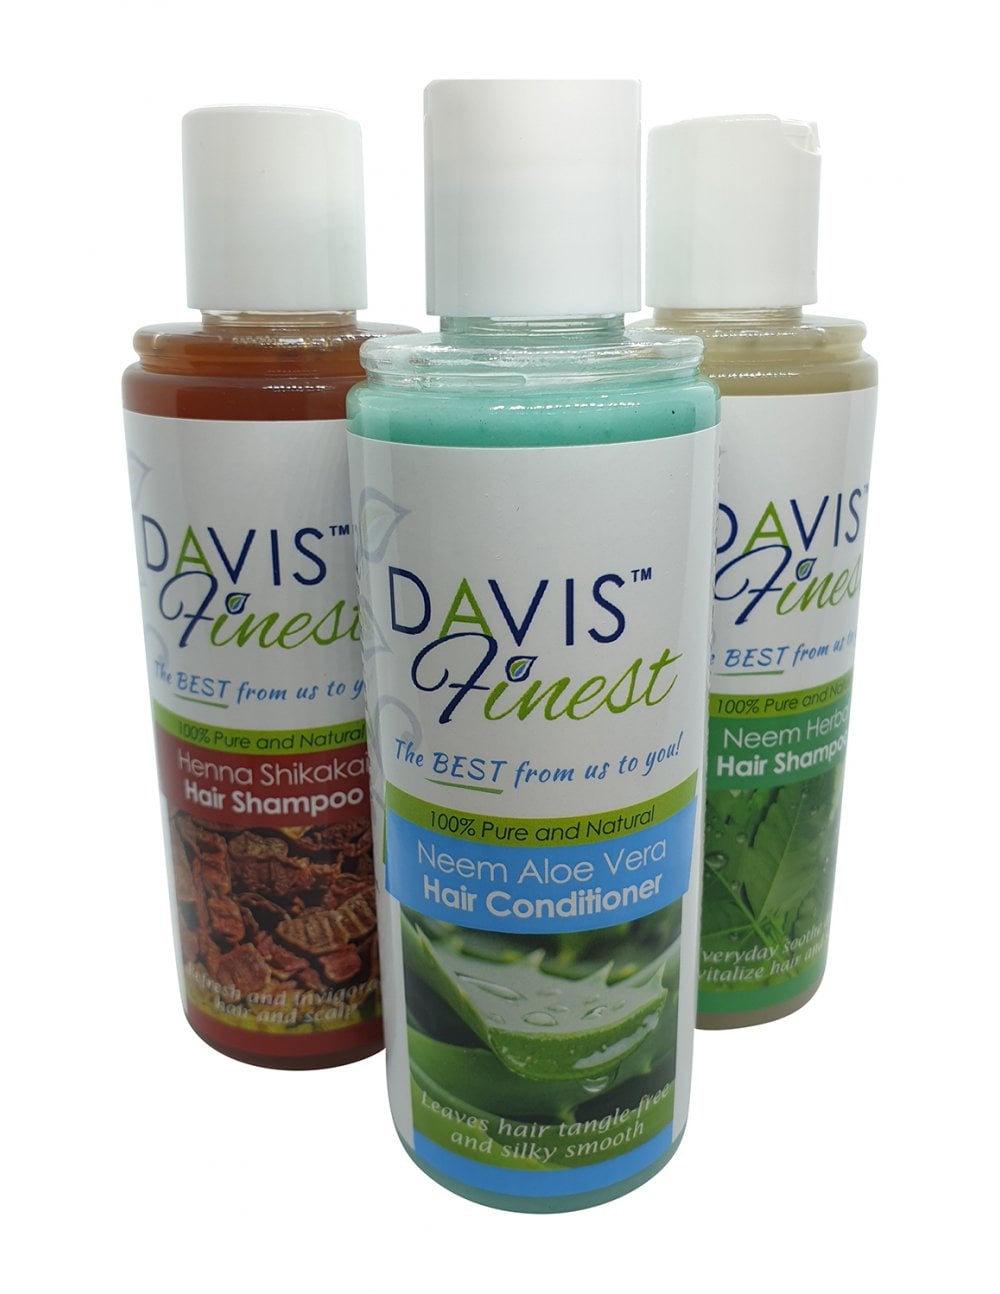 Neem Aloe Vera Herbal Hair Conditioner davisfinest.com 6